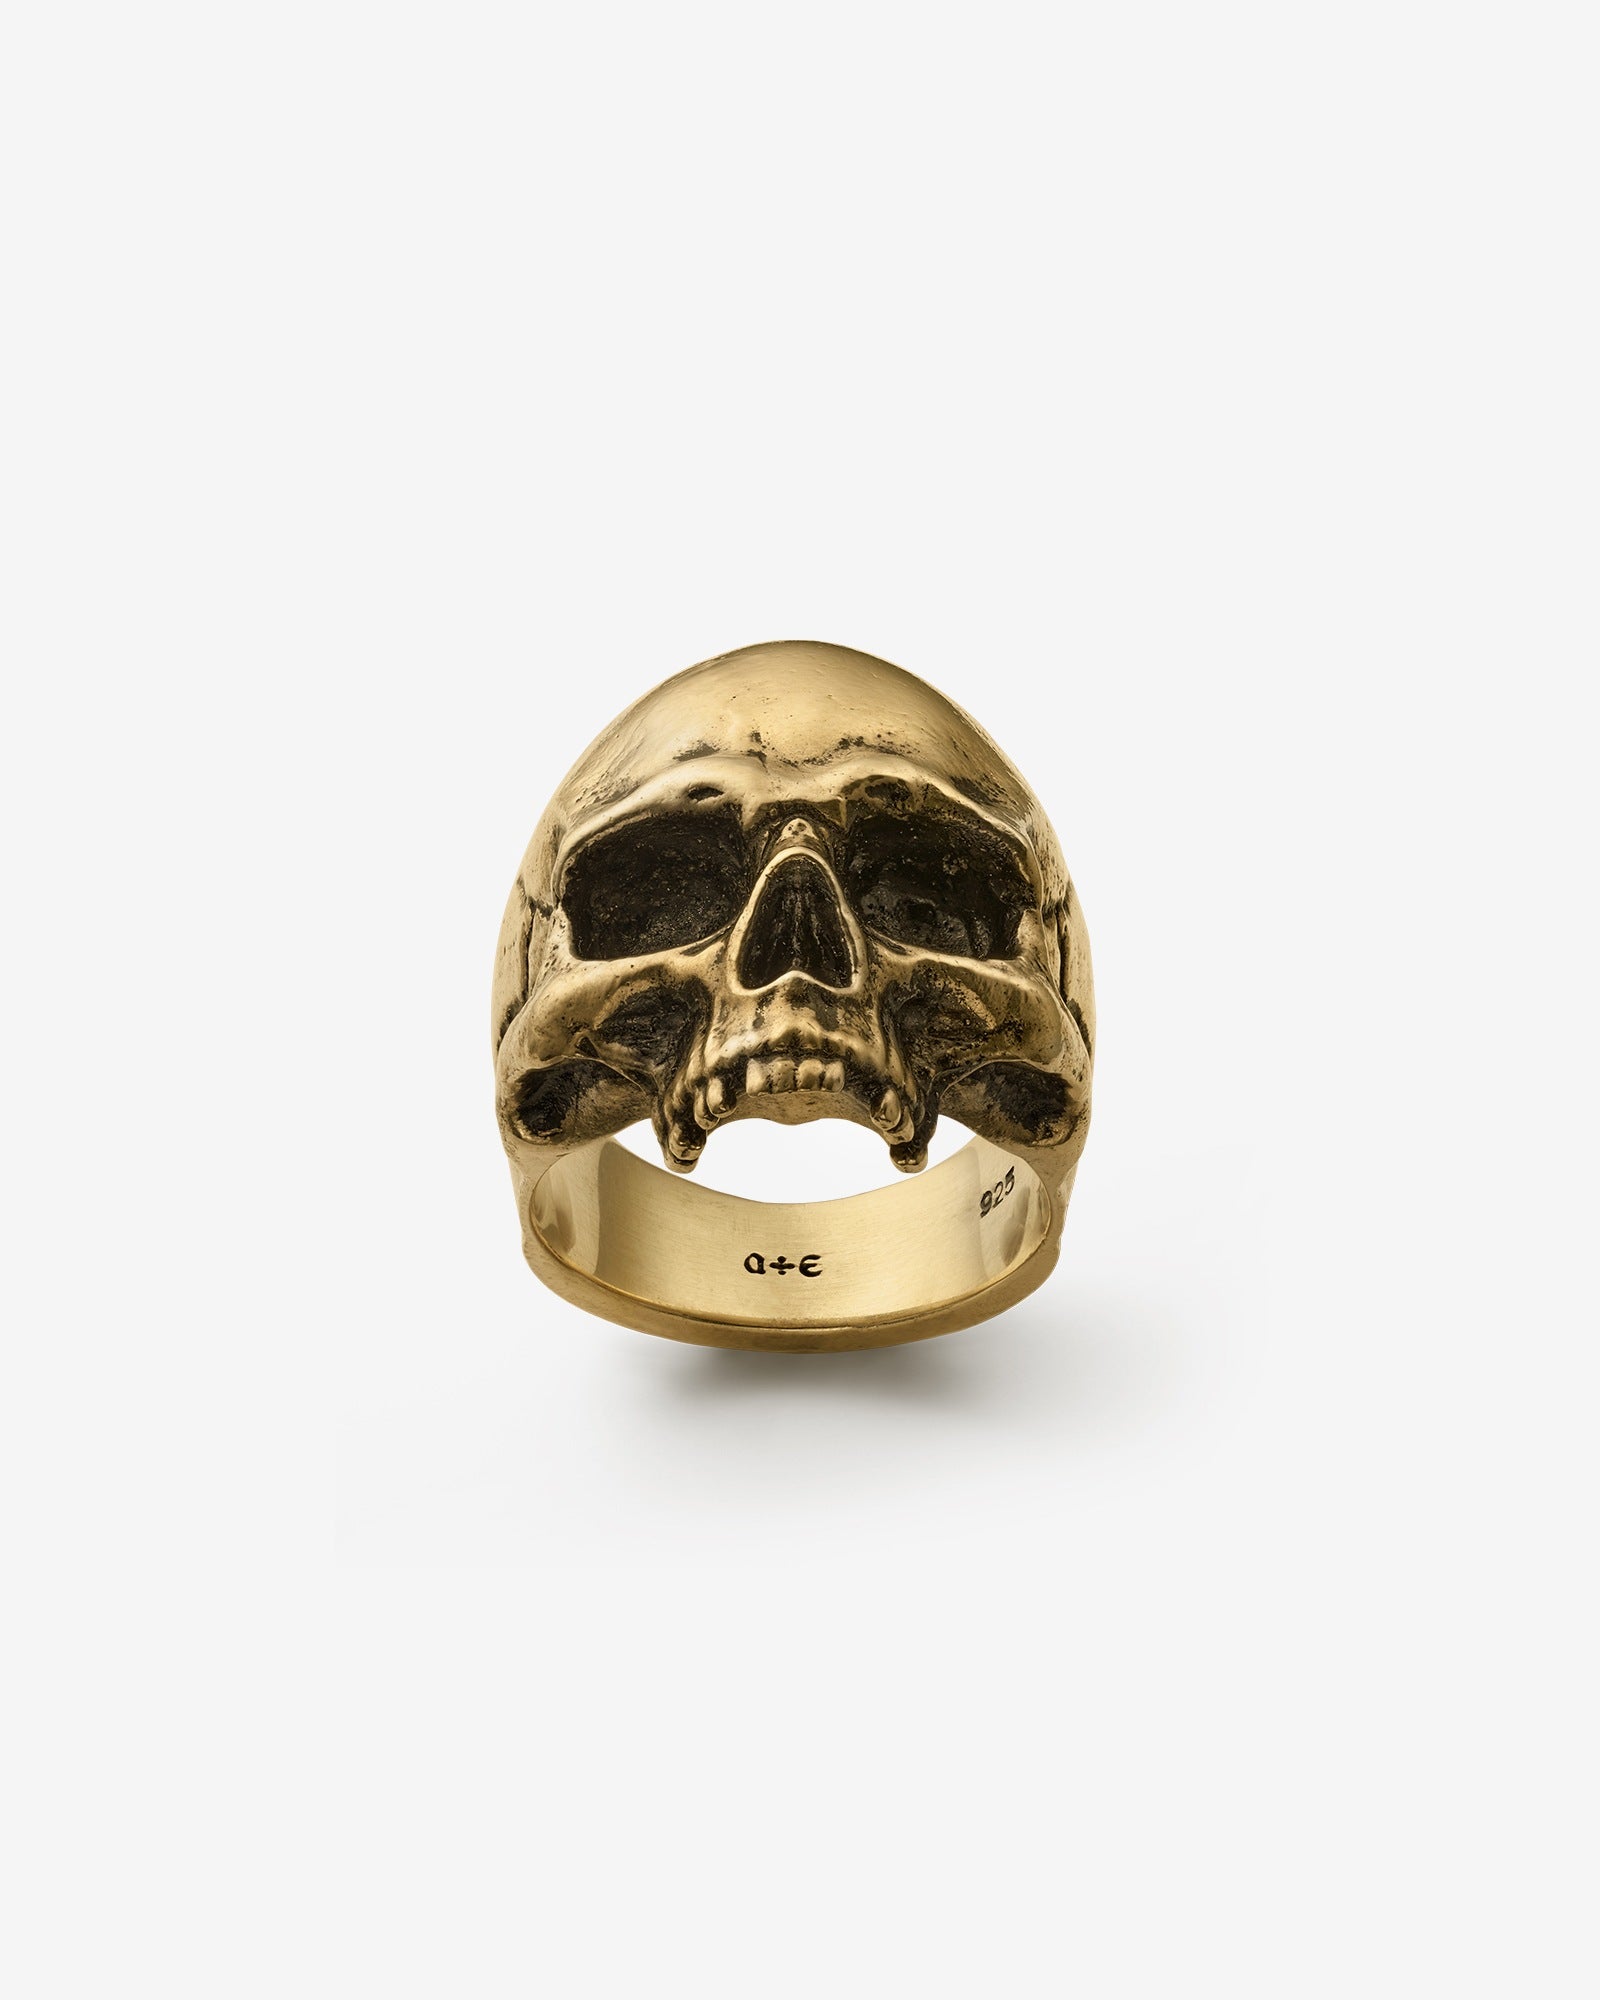 Cranium Ring in US 5 - Gold - Alternative Rings by Ask u0026 Embla